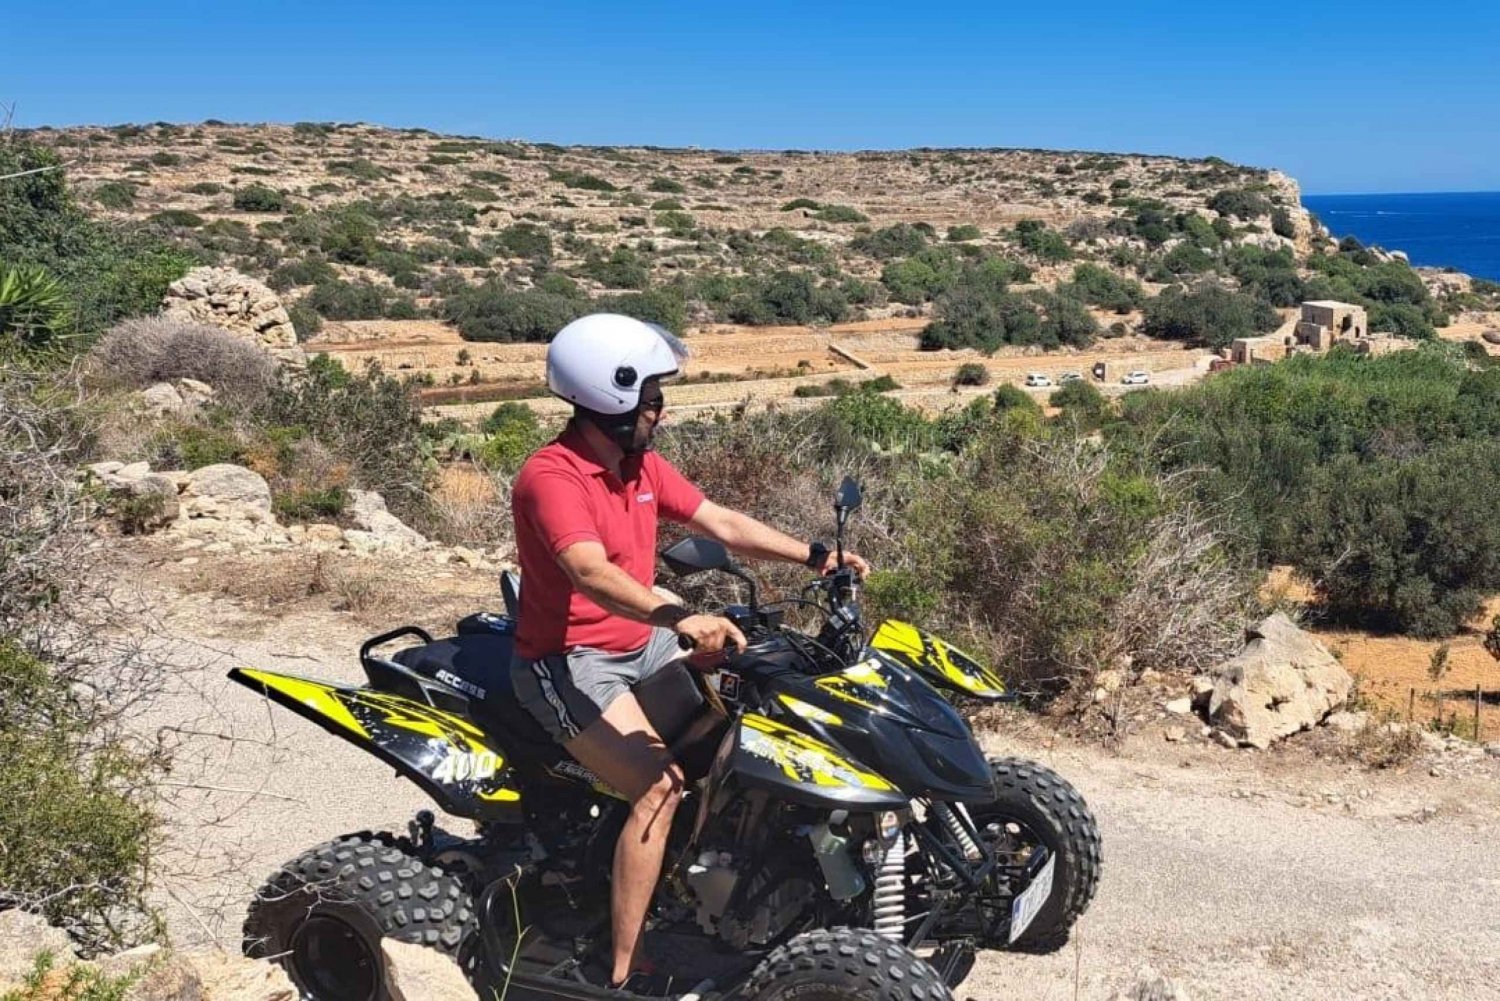 Nord de Malte : Excursion en quad avec paysages terrestres, maritimes et aquatiques